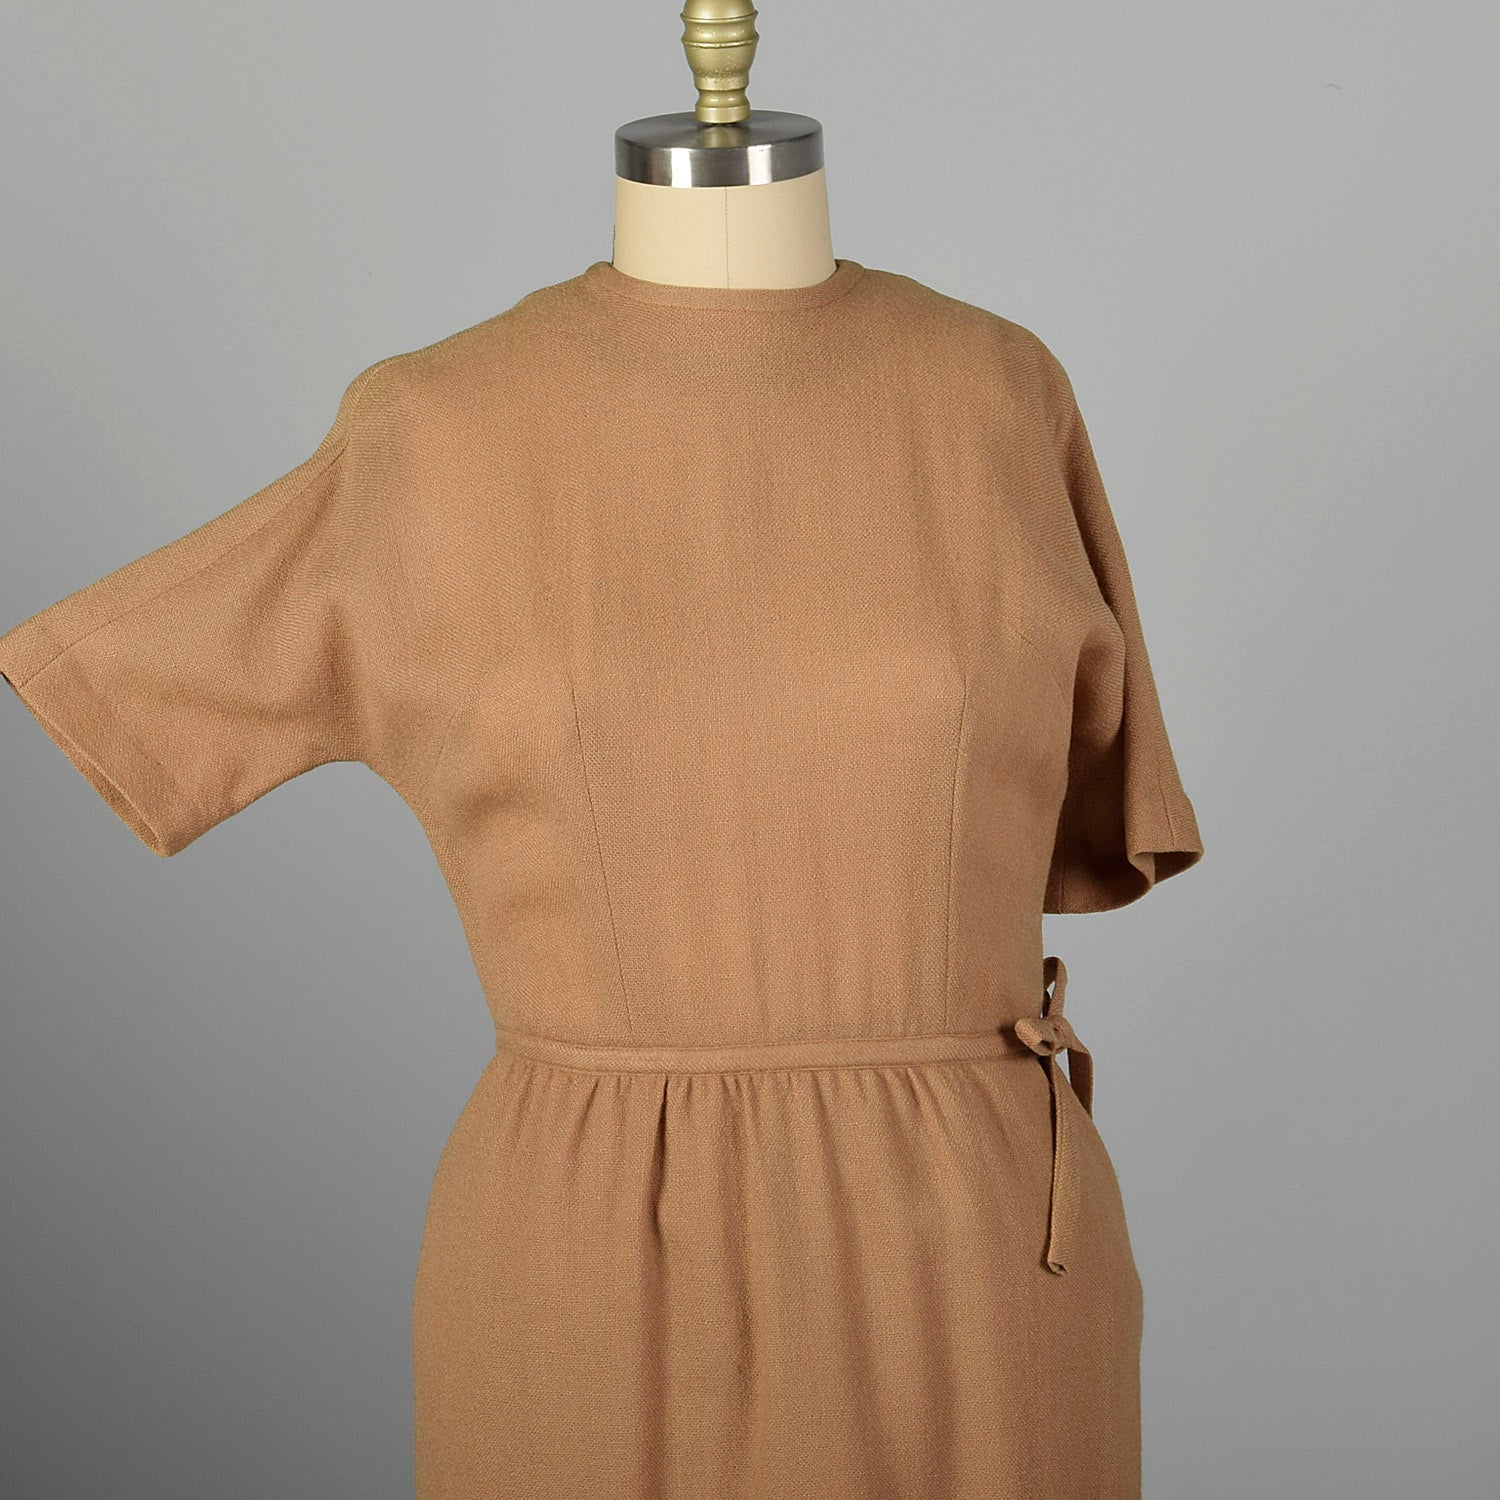 XL 1960s Tan Day Dress